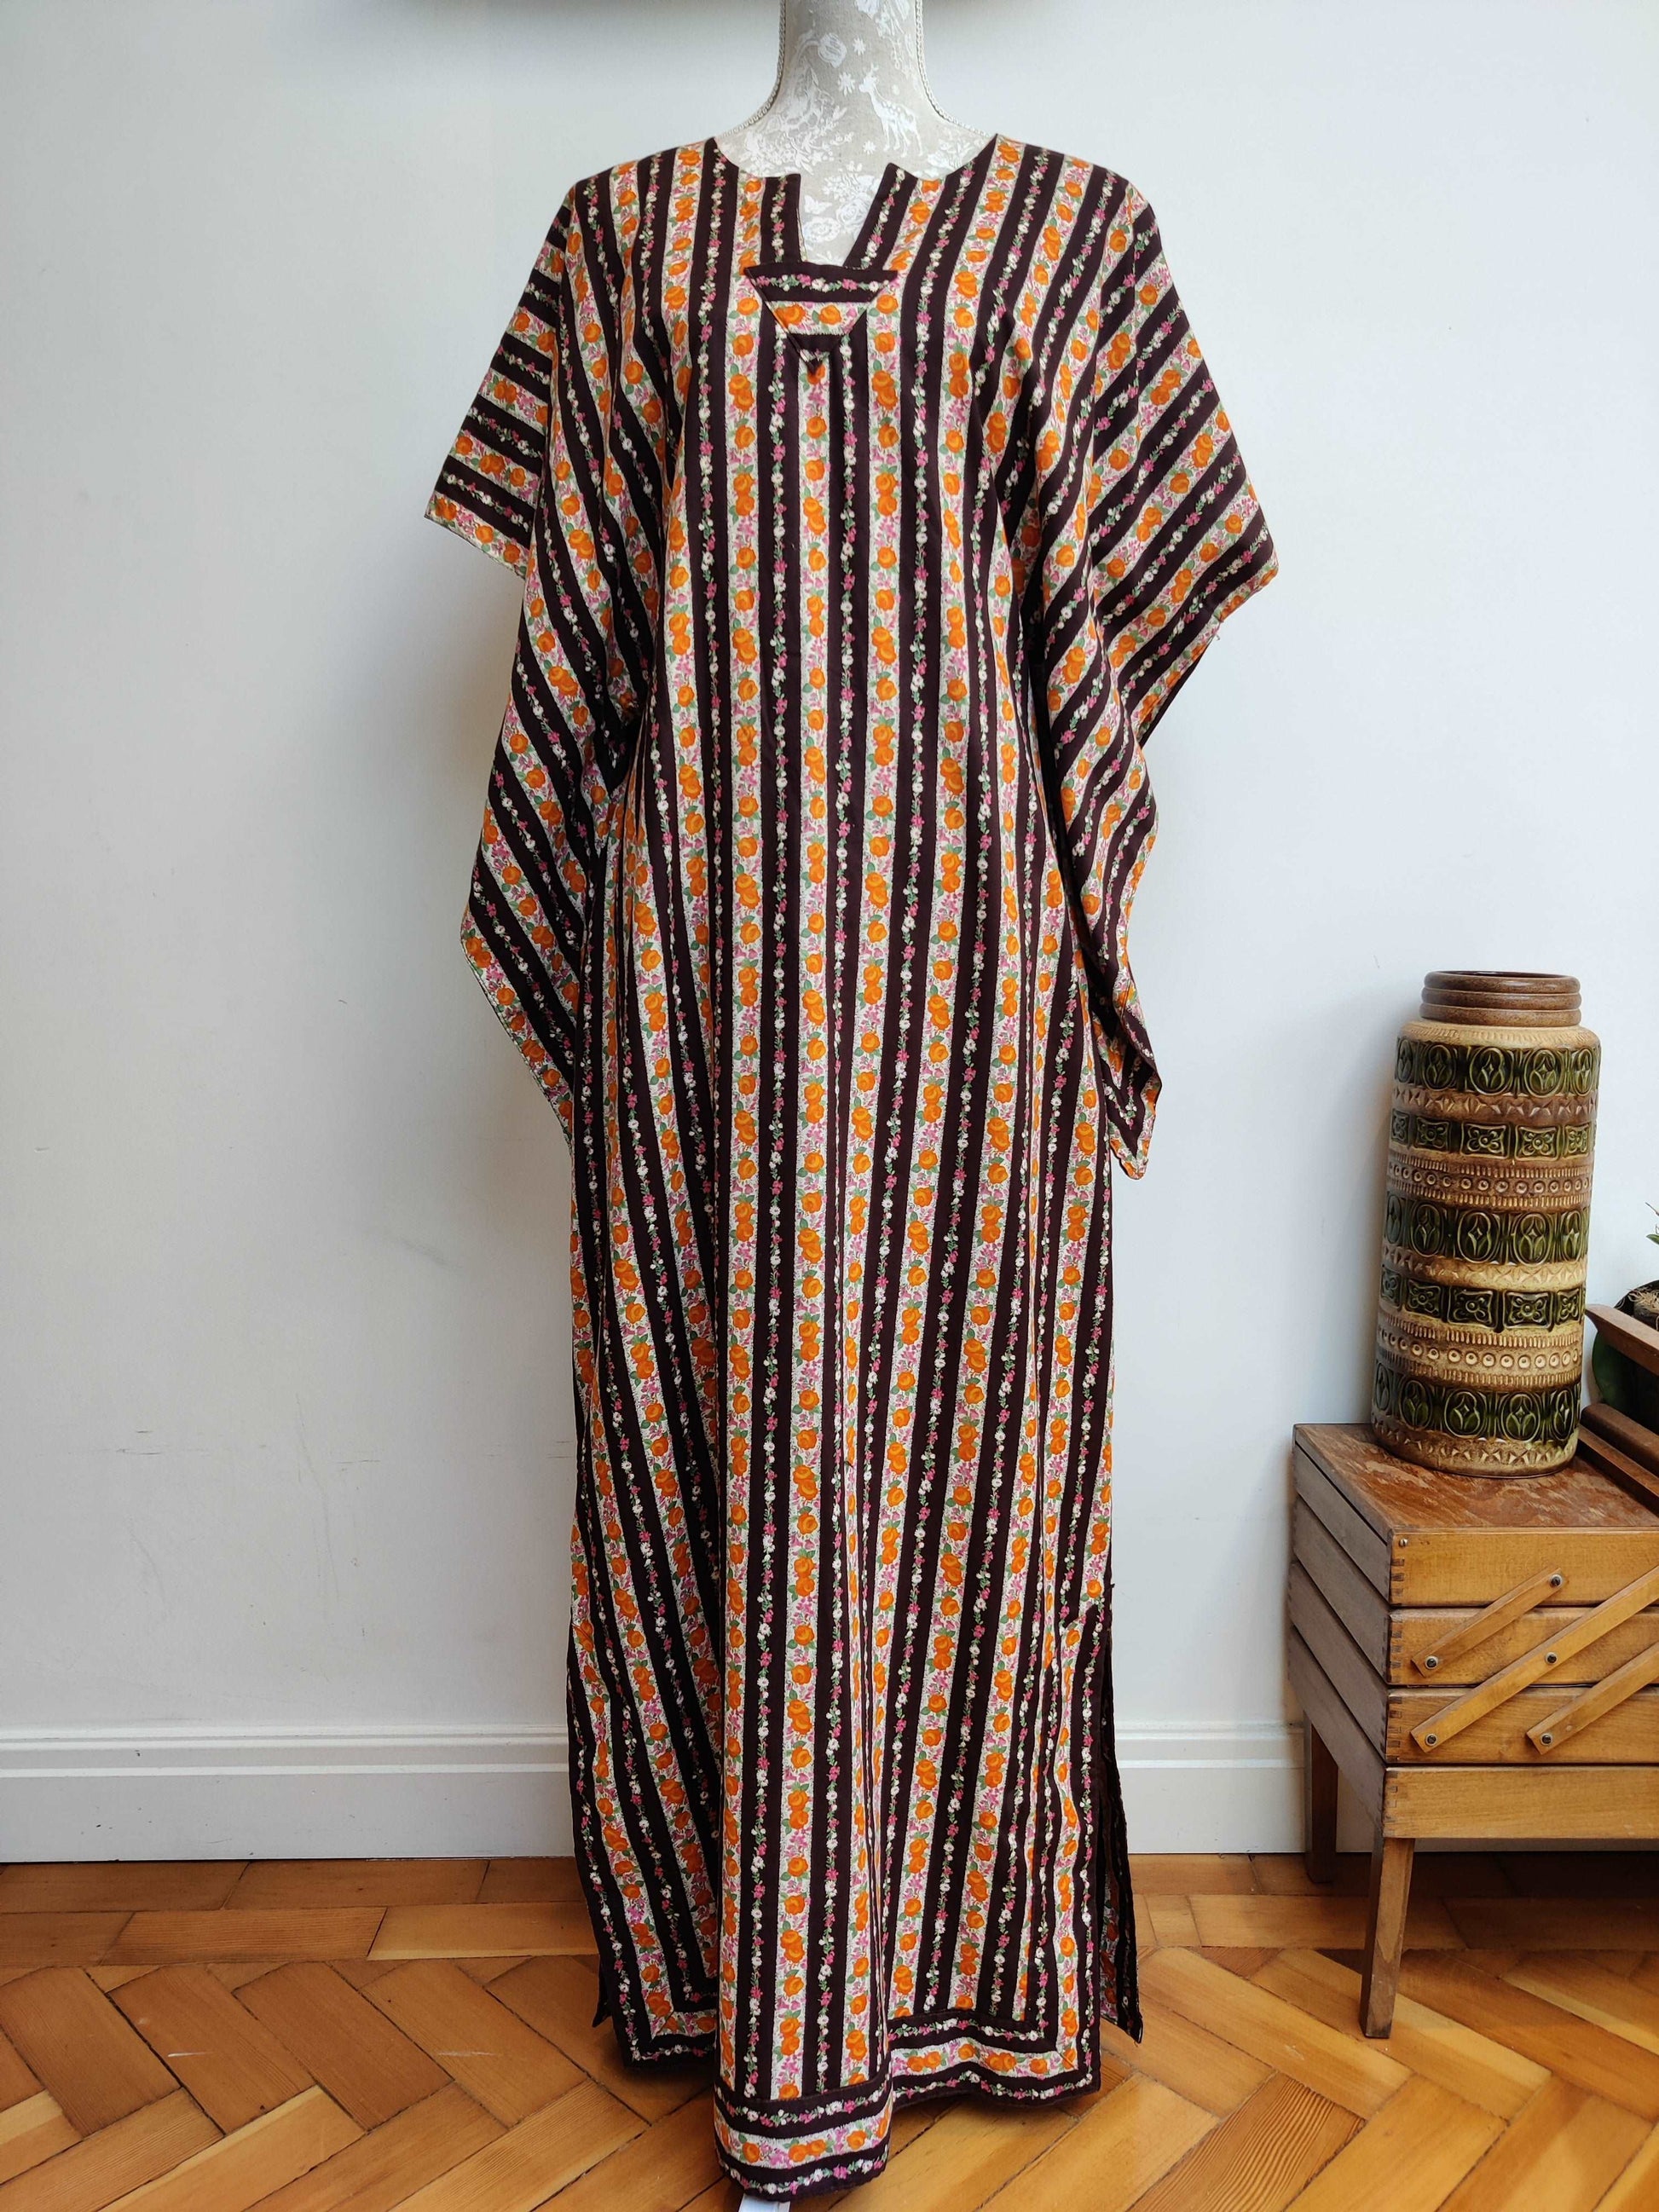 70s maxi dress with kaftan sleeves